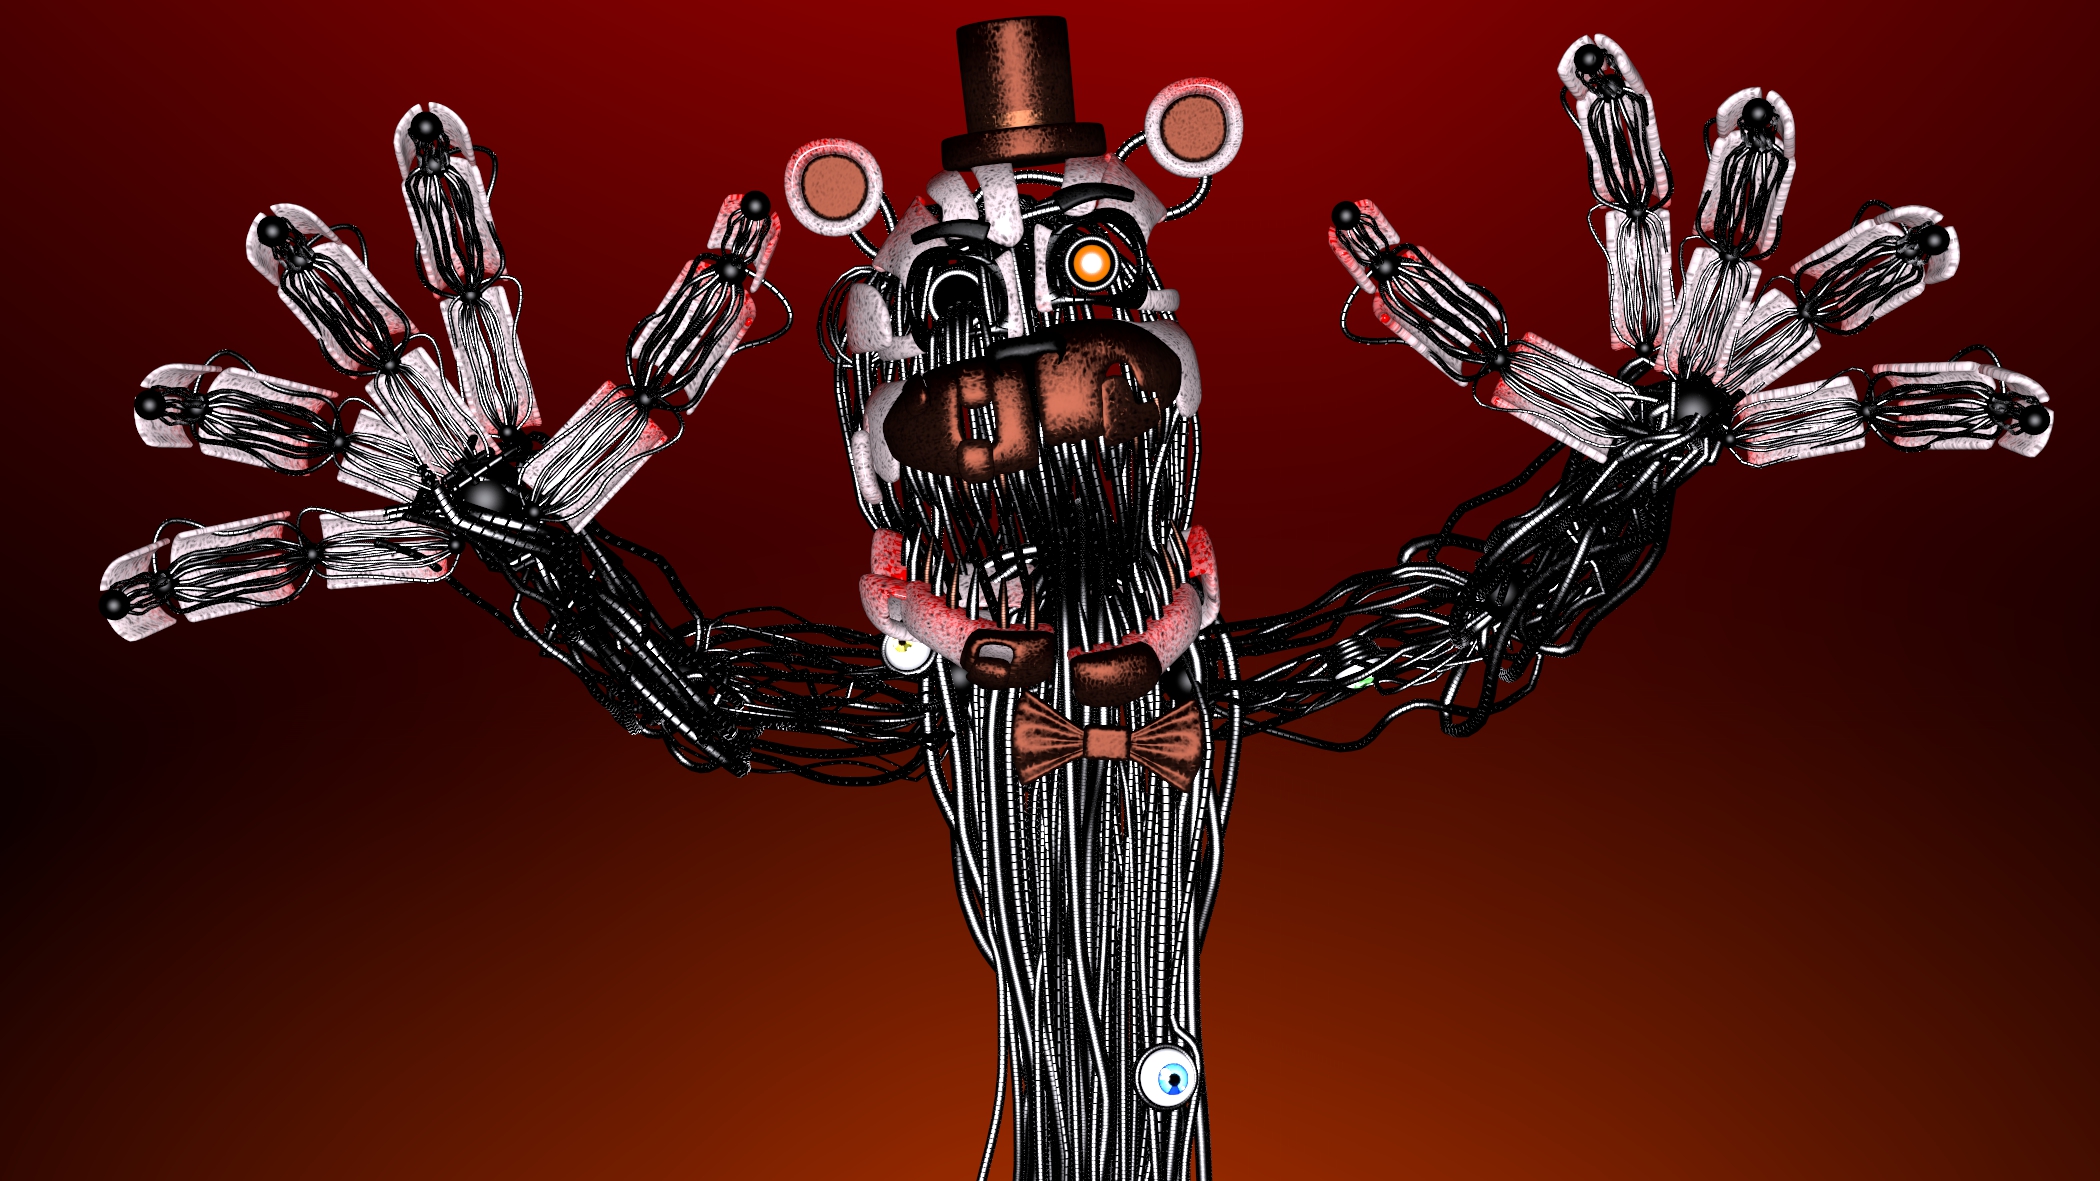 Molten Freddy Jumpscare (alternative) by MisterioArg on DeviantArt